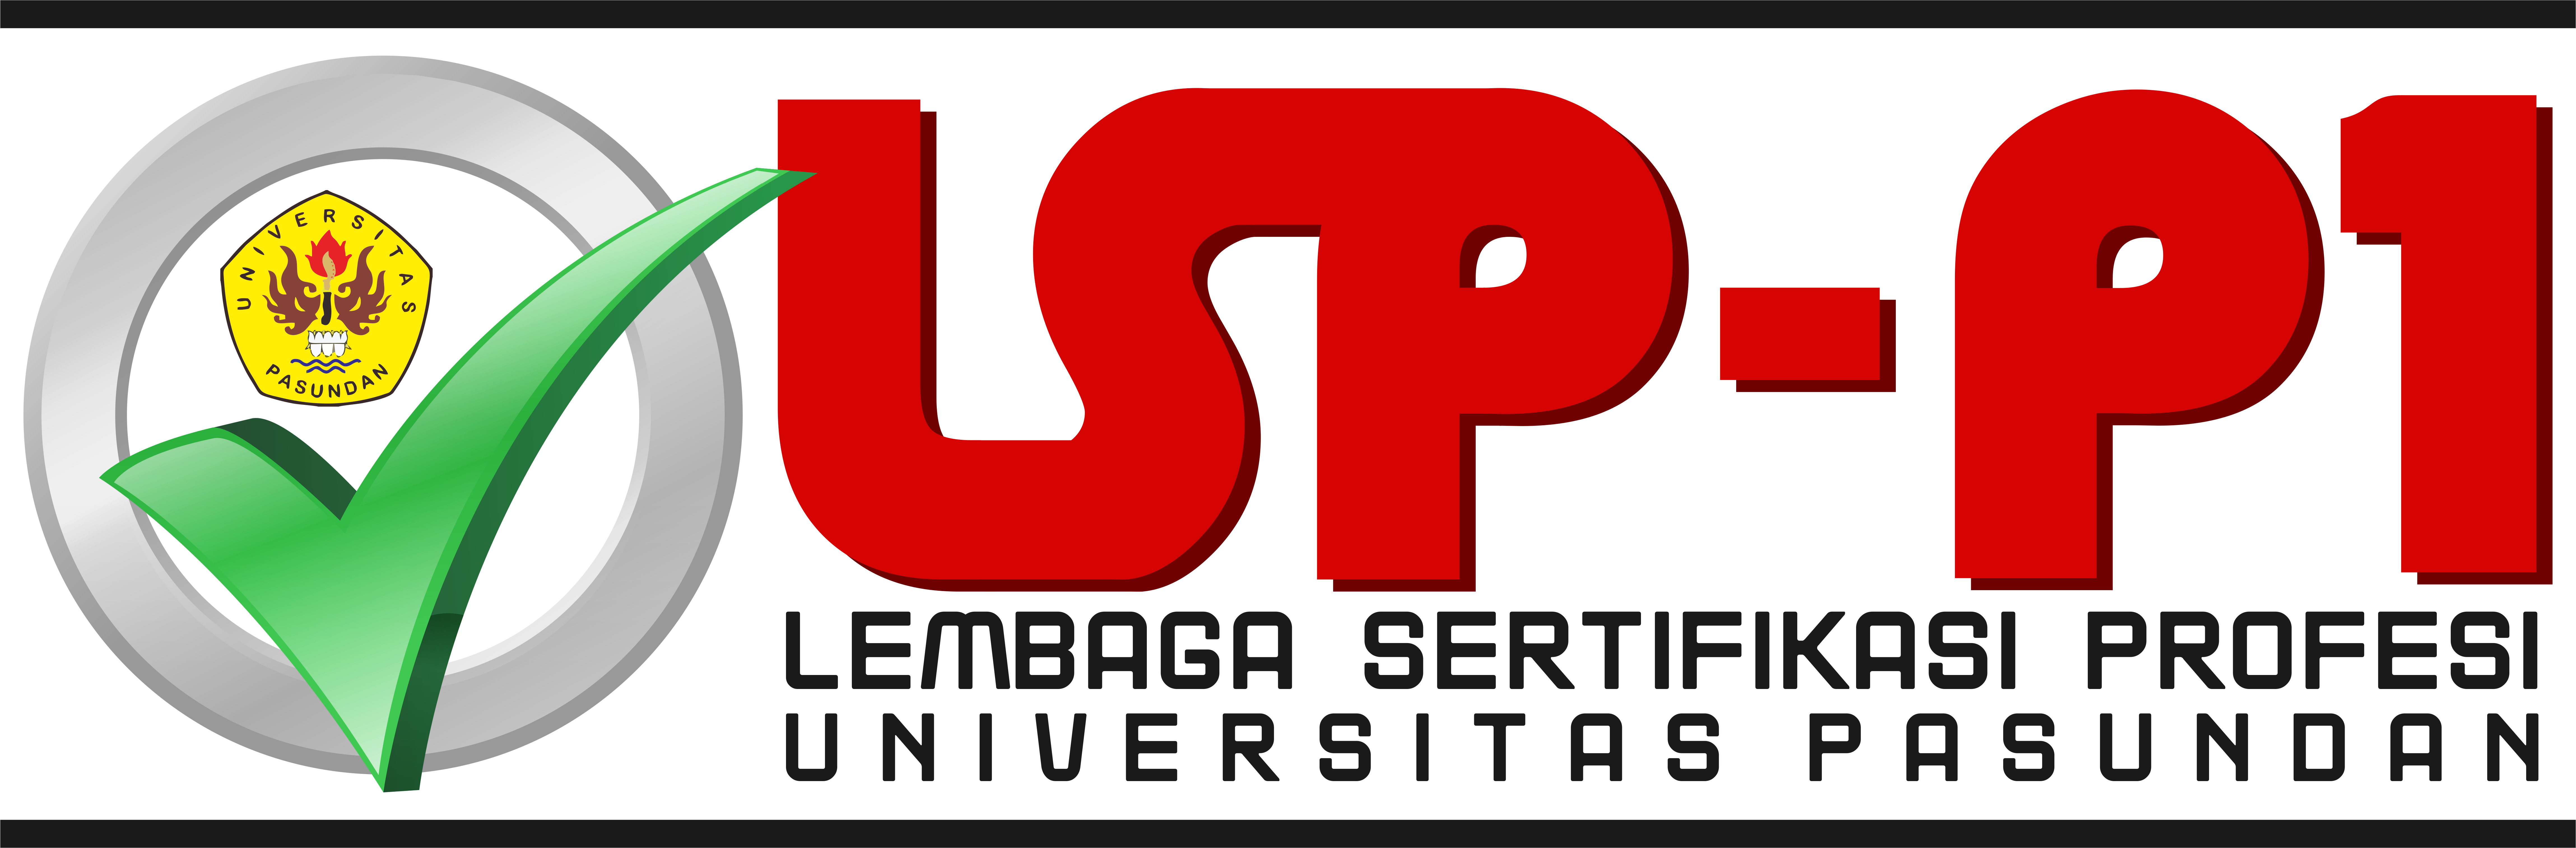 Universitas Pasundan Logo